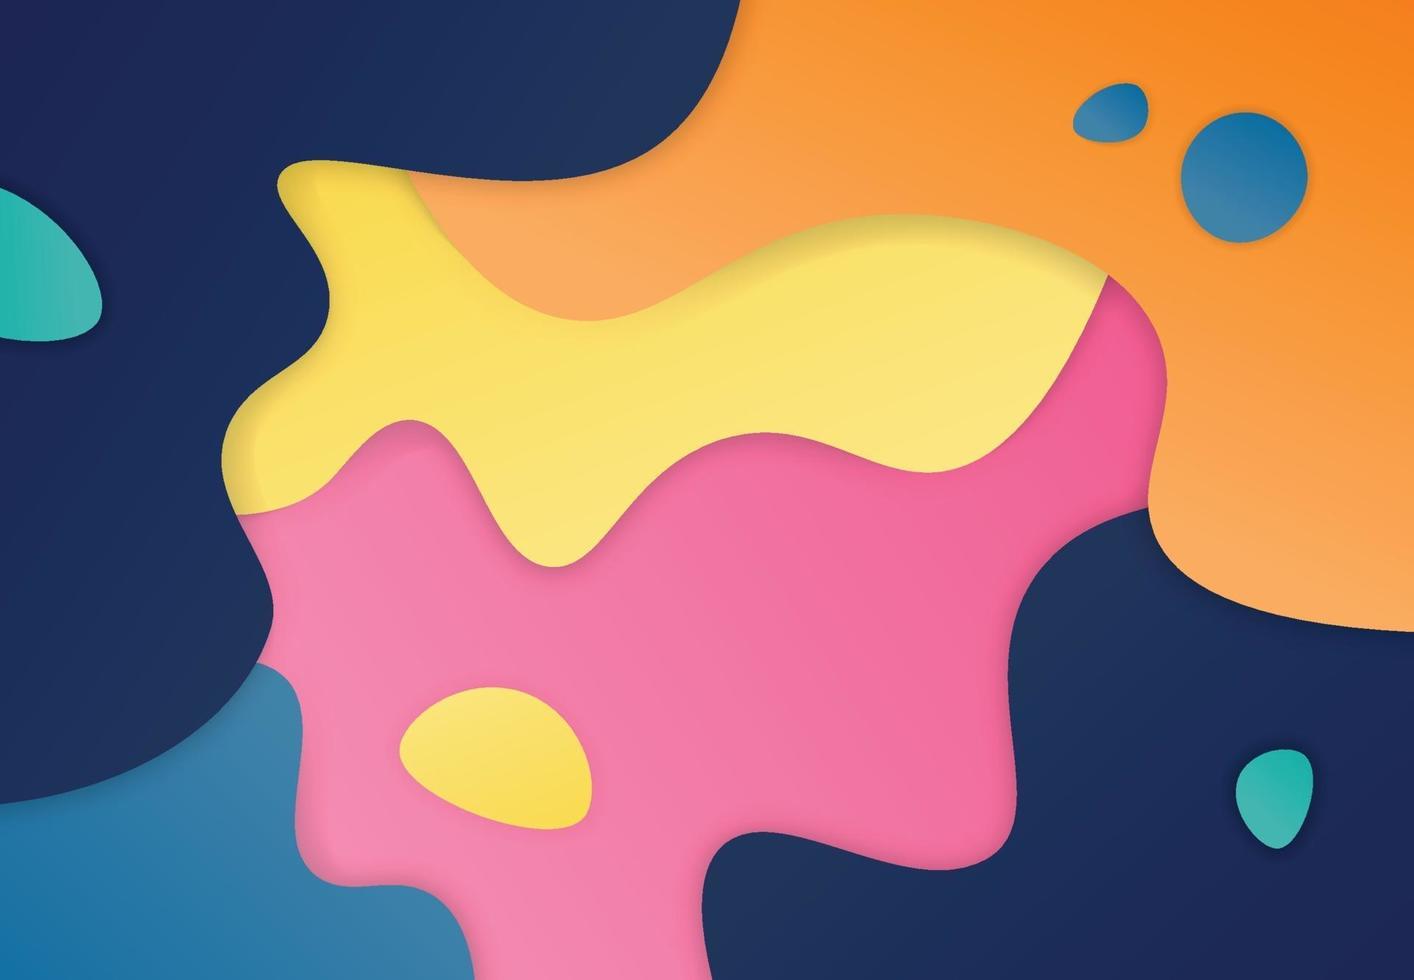 Abstract fluid shape of vivid color design for kid presentation. vector